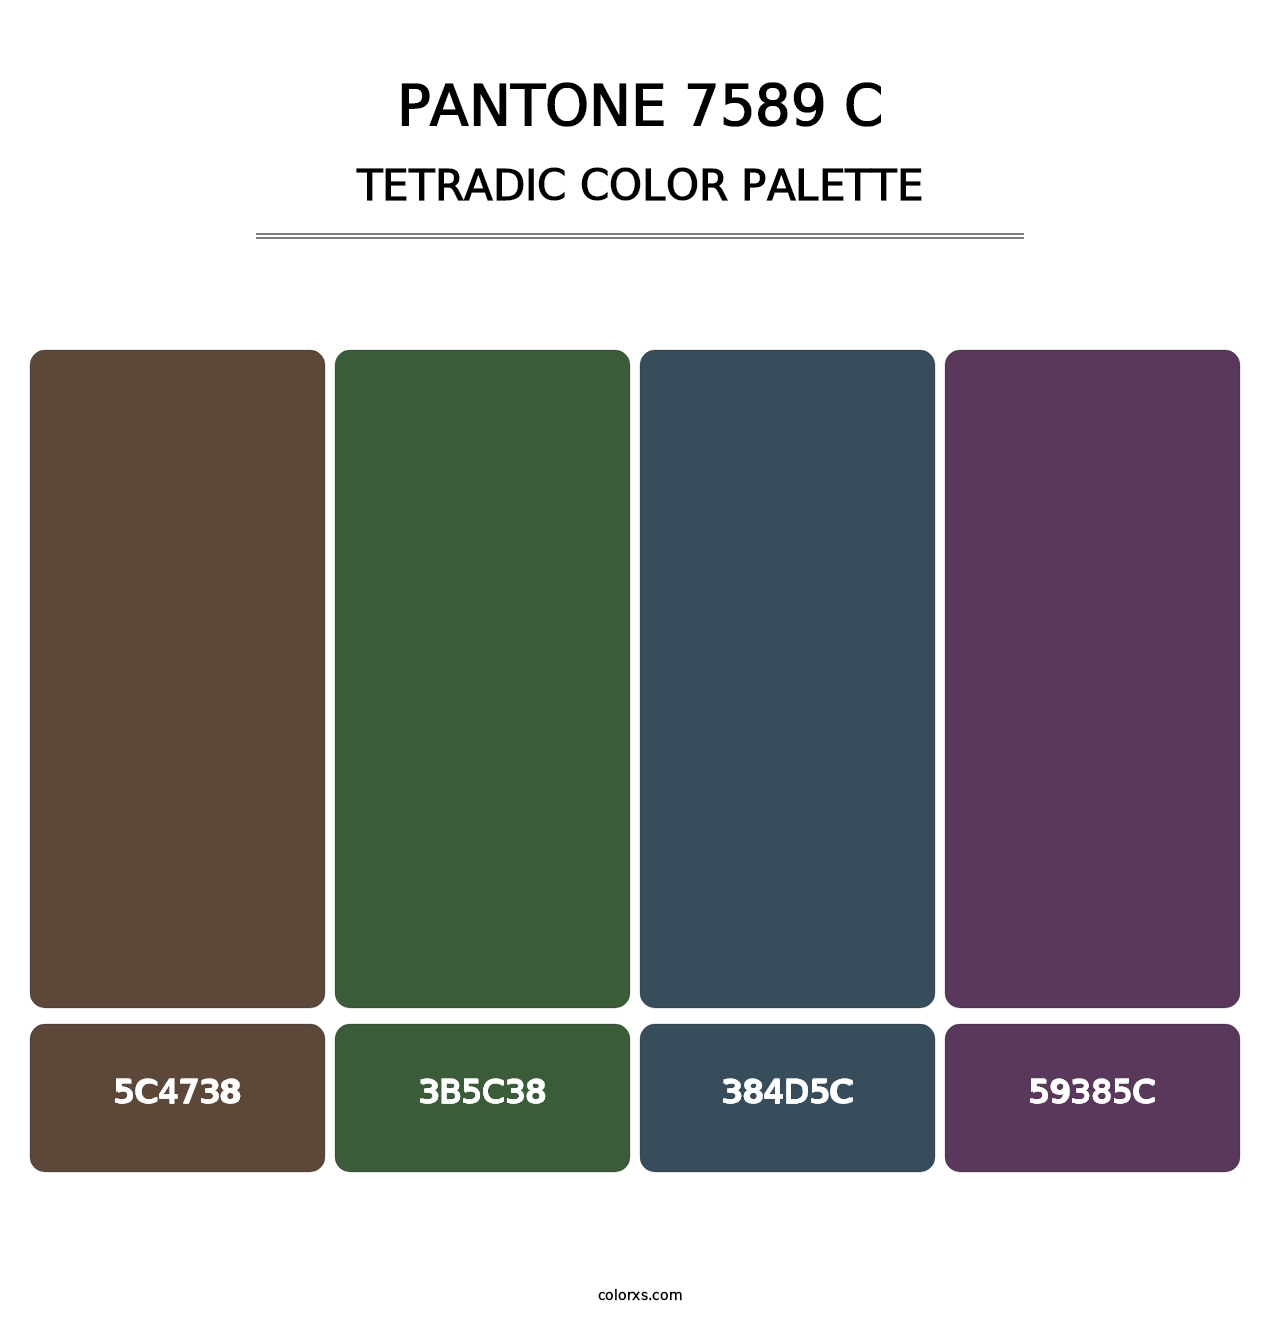 PANTONE 7589 C - Tetradic Color Palette